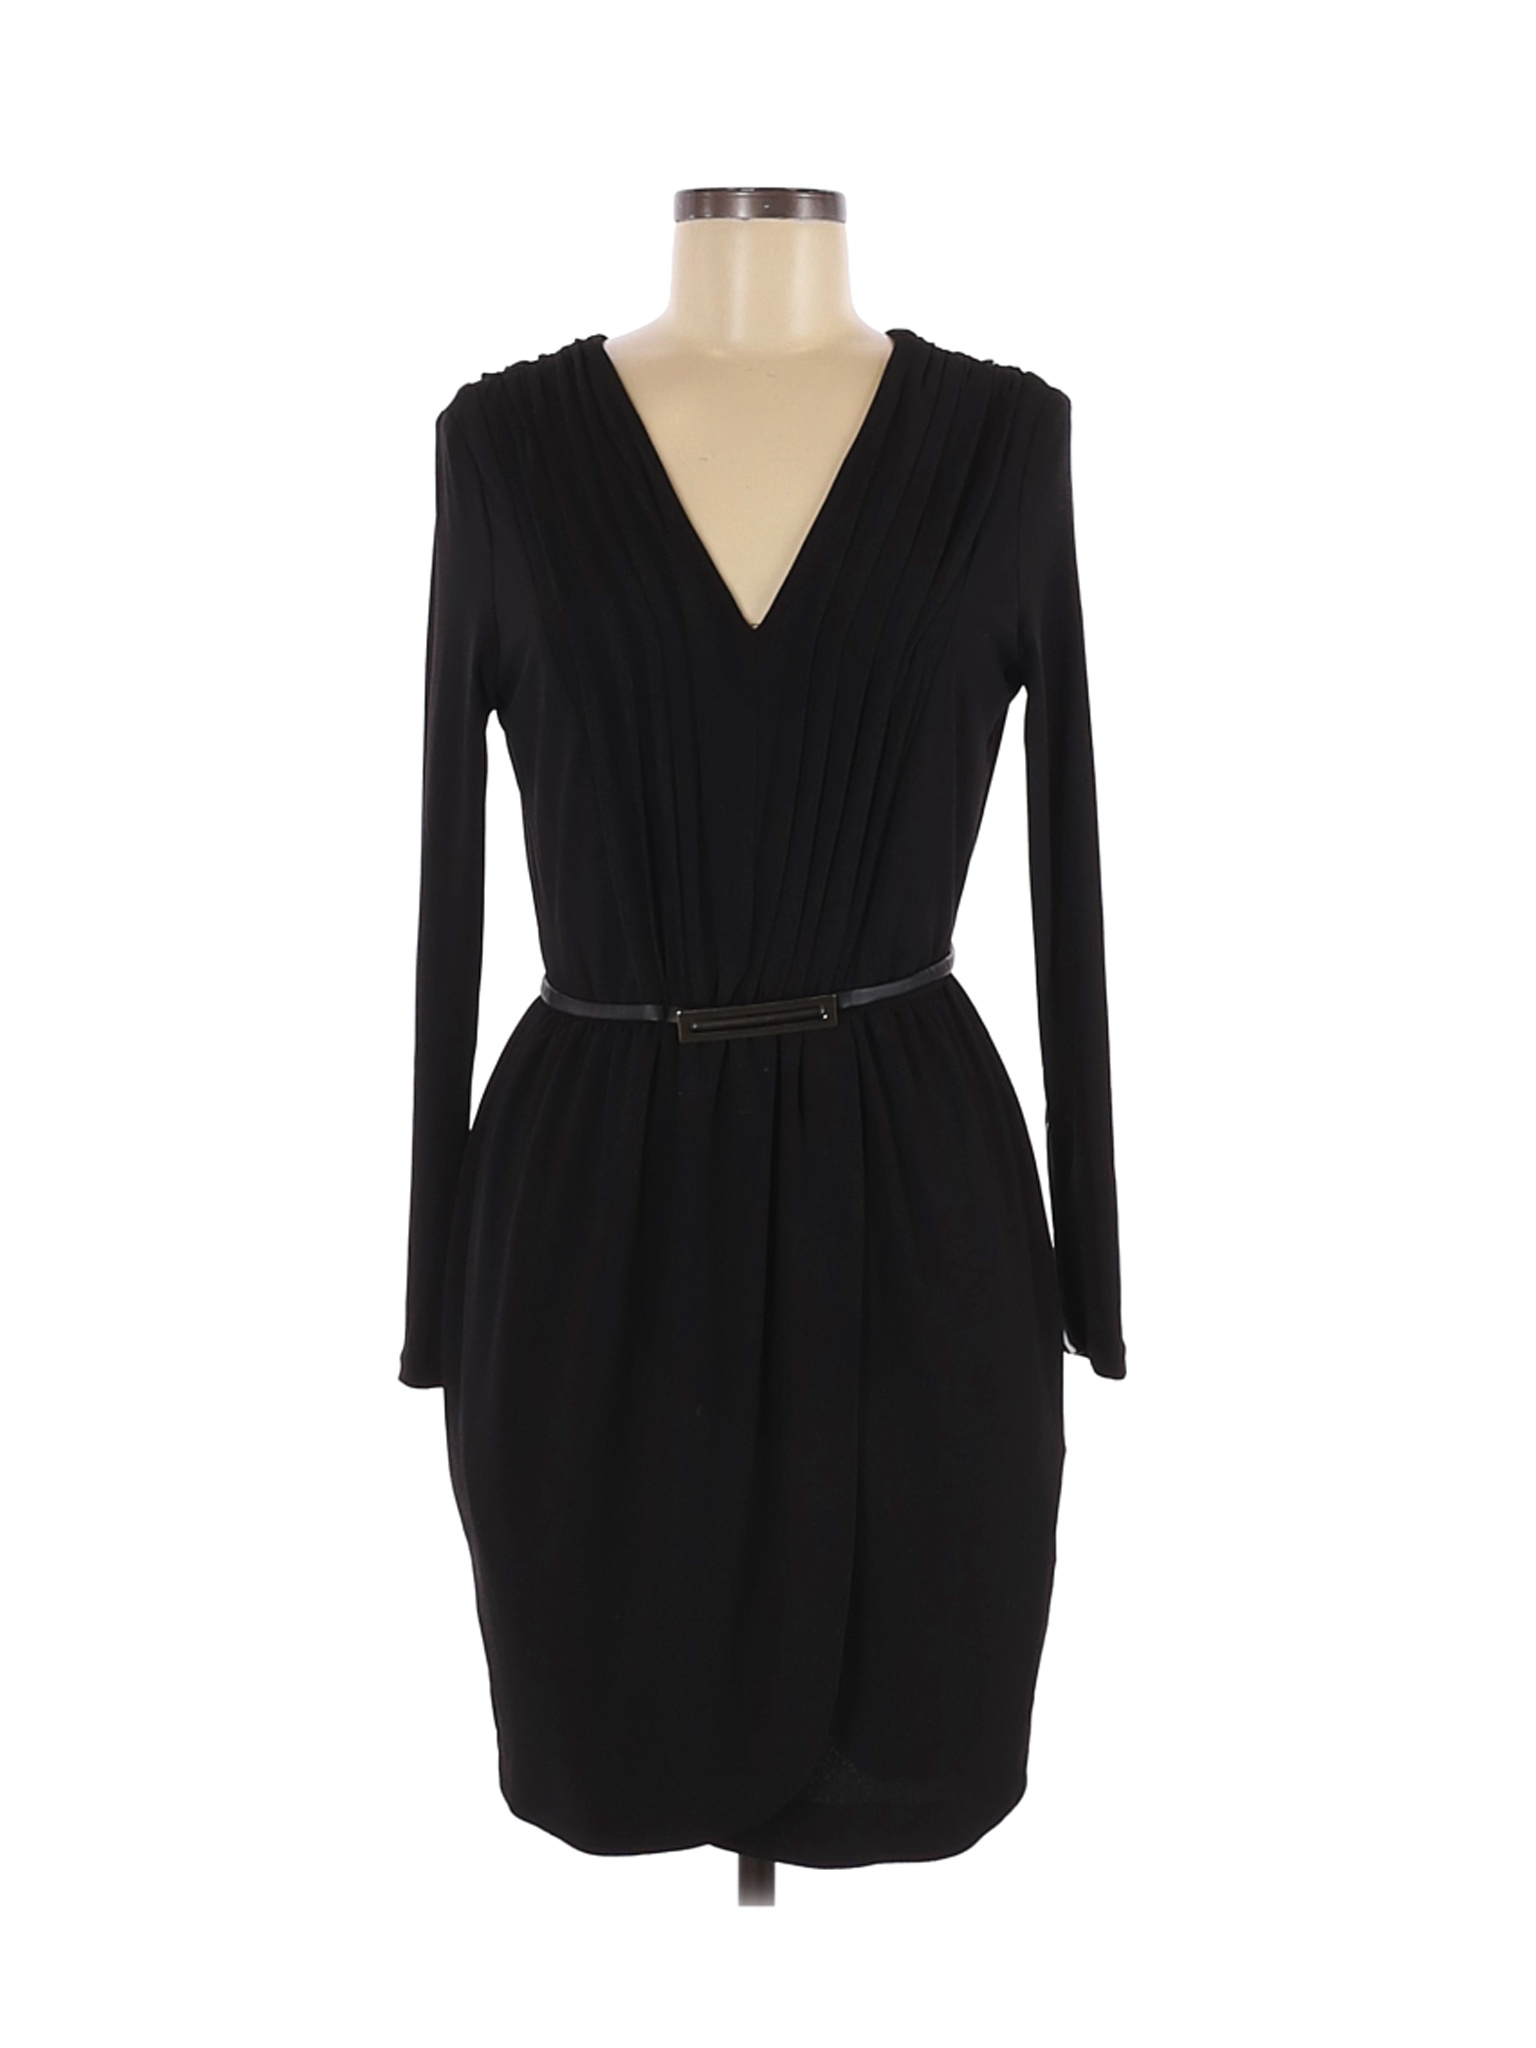 Zara Basic Women Black Cocktail Dress M | eBay